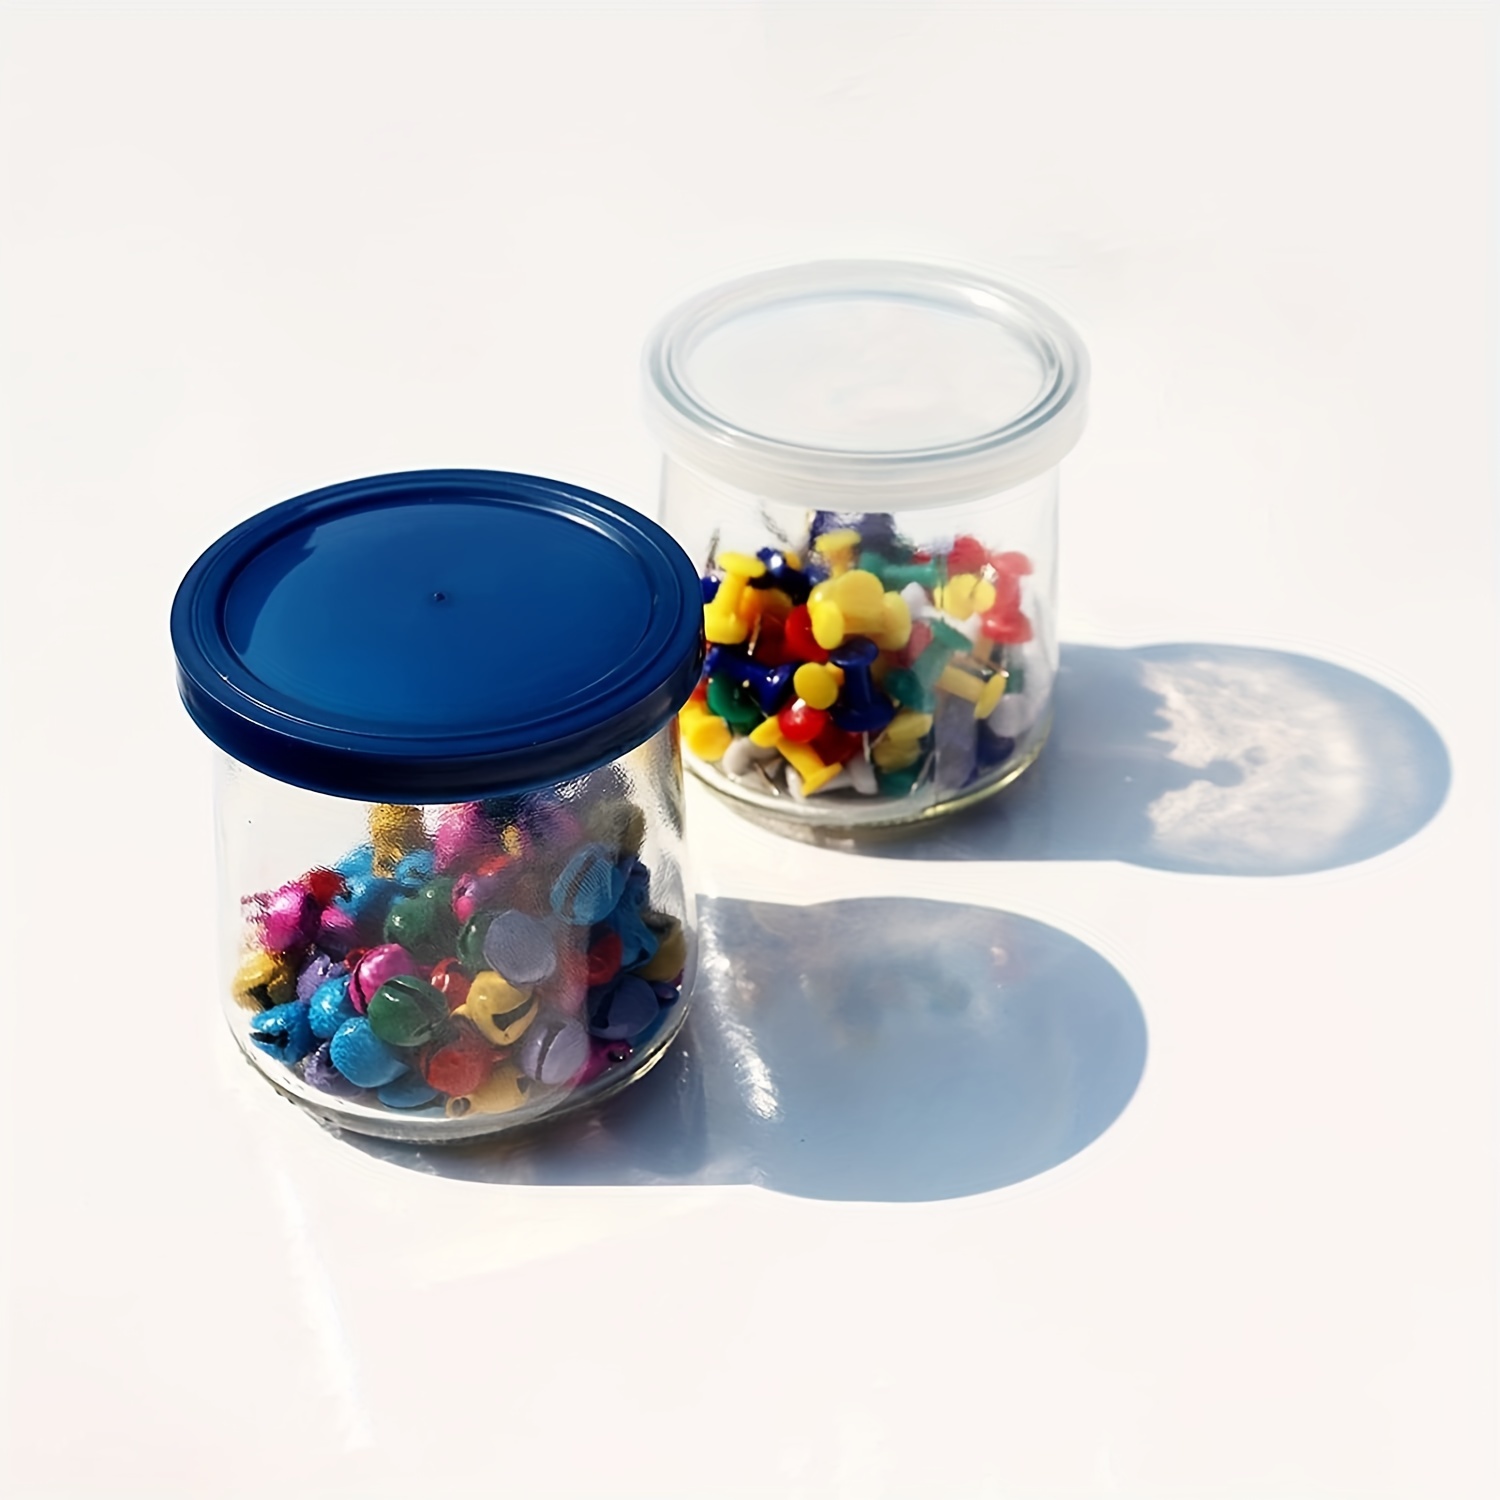 30 Pieces Oui Yogurt Jar Lids, Yogurt Container Lids, Clear Plastic Blue  Oui Lids for Cookie Coffee Supplies Glass Jars Containers